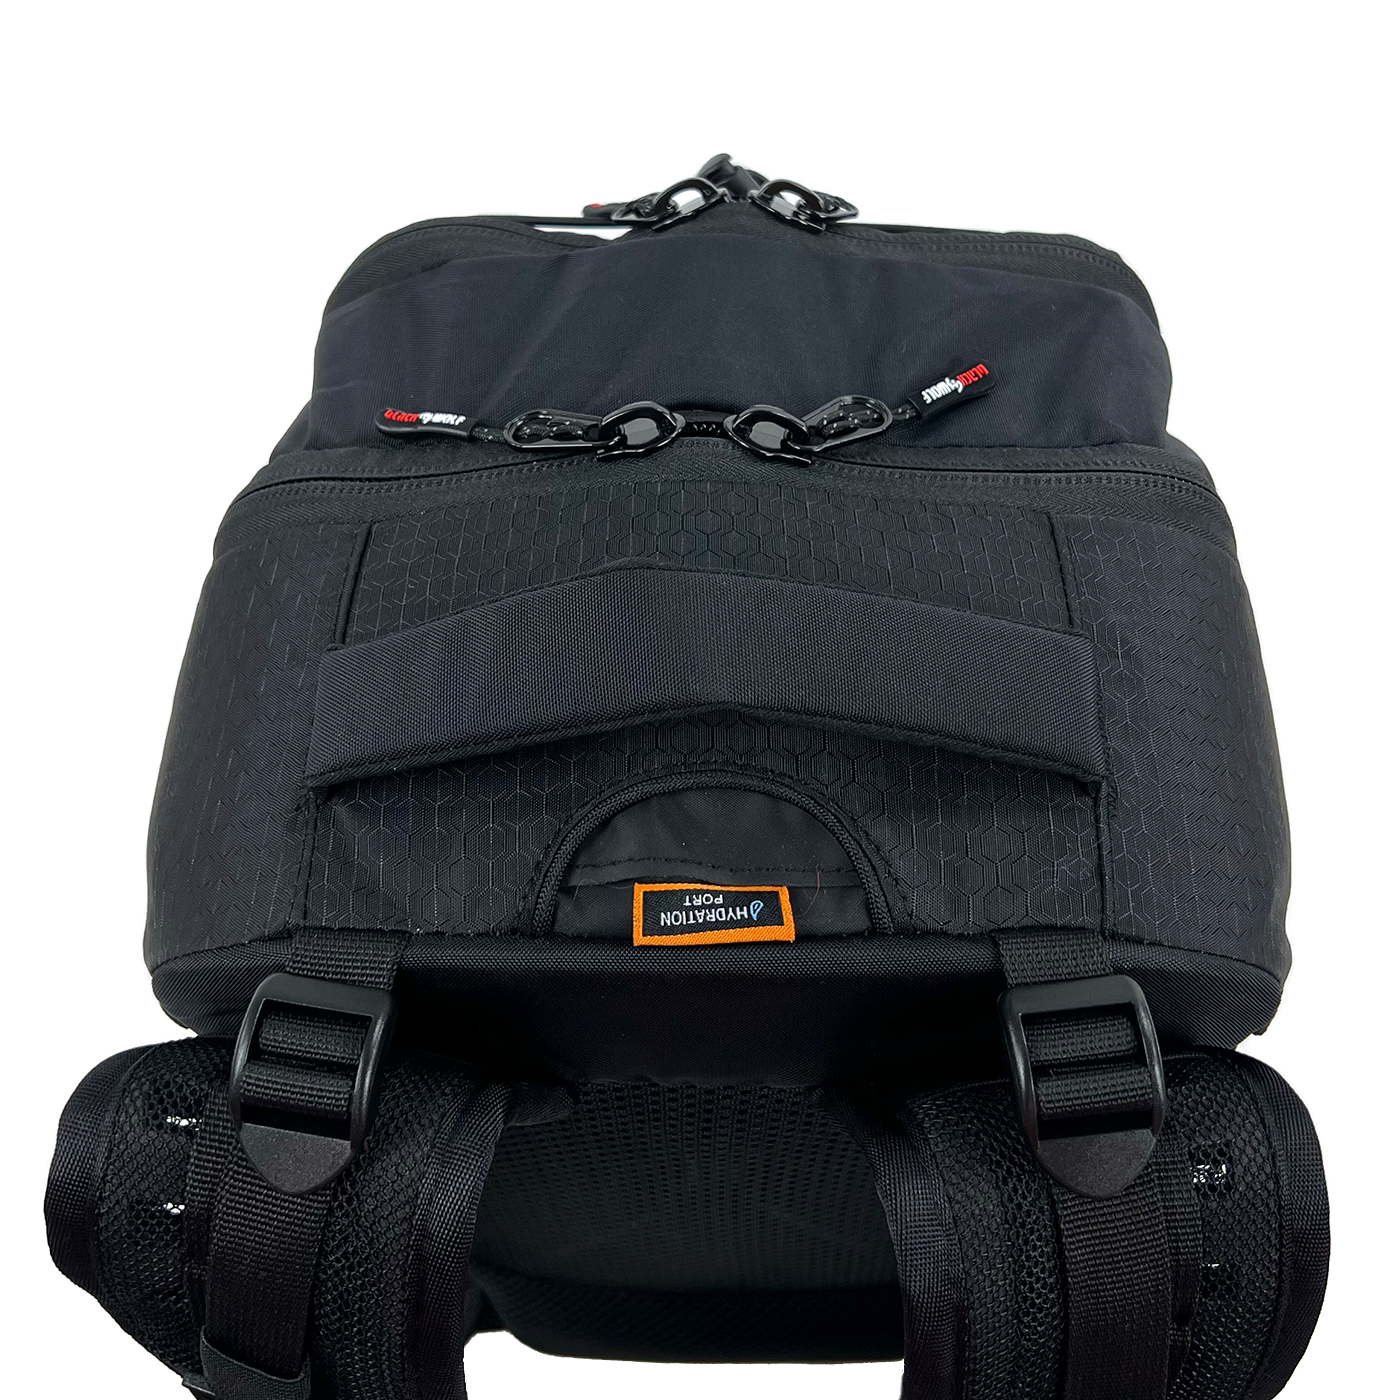 Axiom 40L Backpack